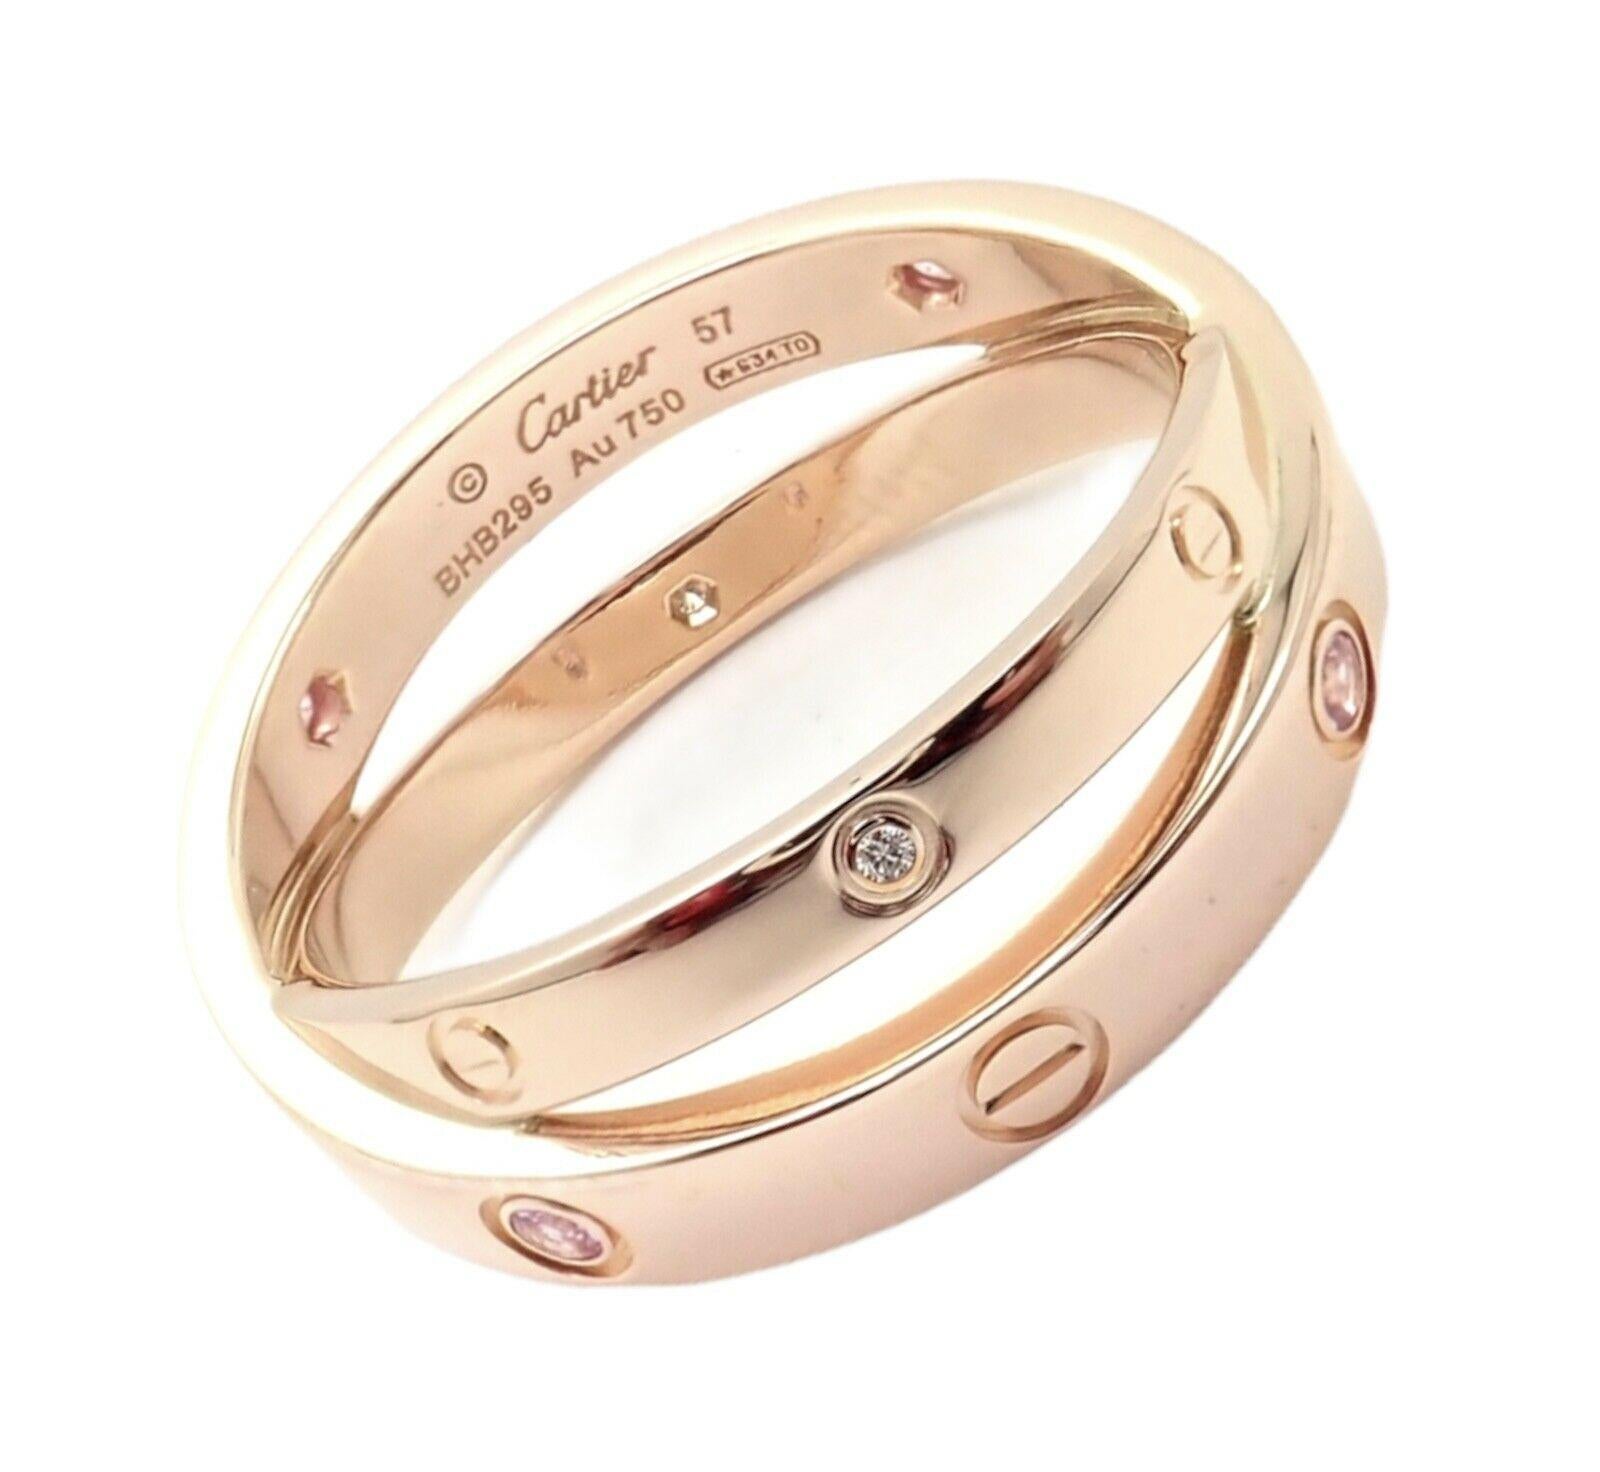 cartier love ring pink sapphire